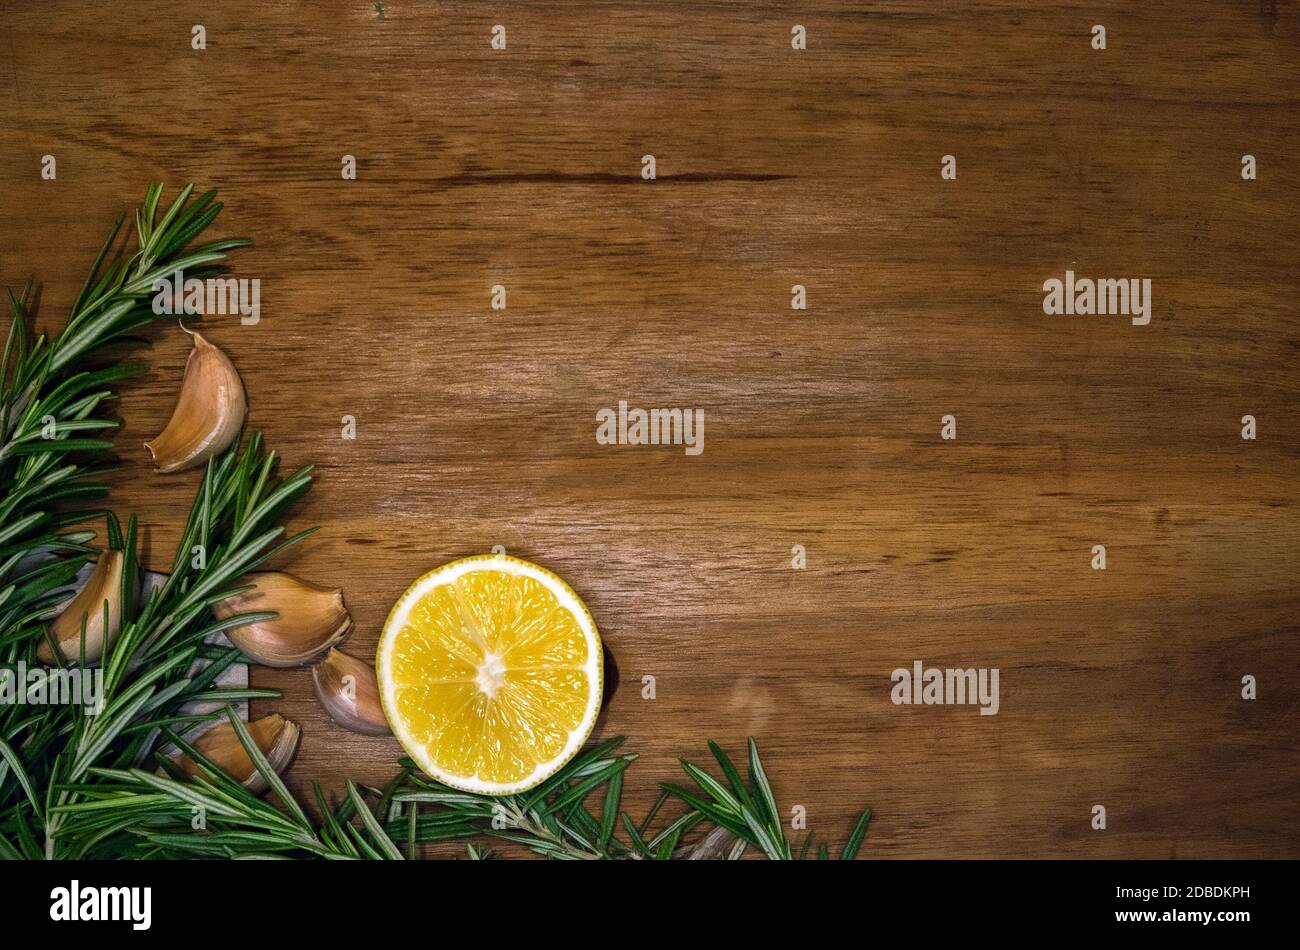 Fresh rosemary sprigs, garlic cloves and lemon half on a dark wooden board, postcard or invitation template Stock Photo